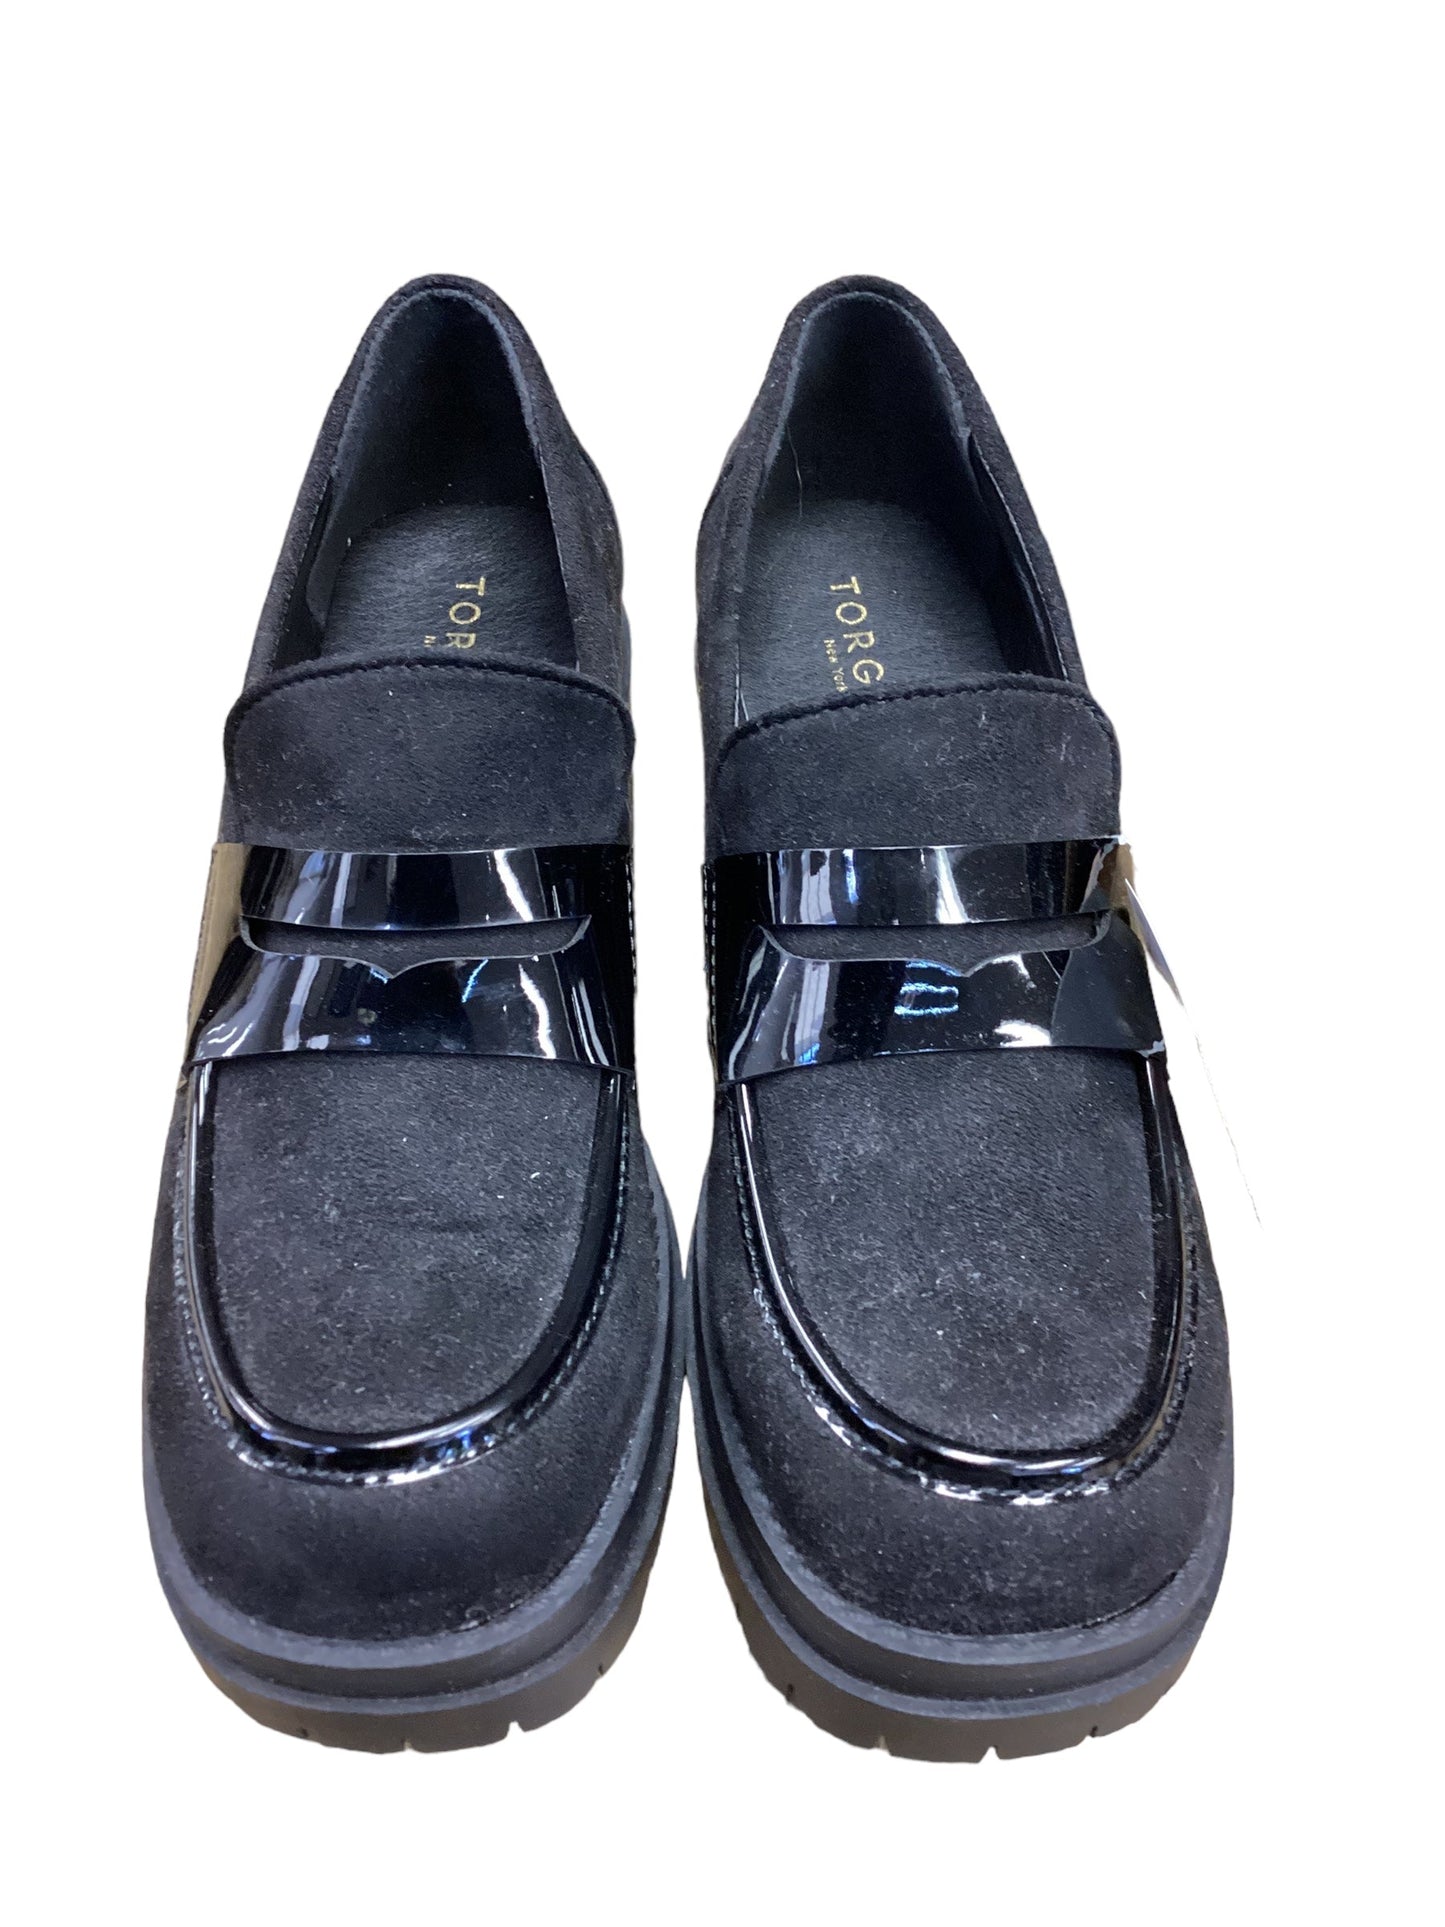 Black Shoes Heels Block Clothes Mentor, Size 6